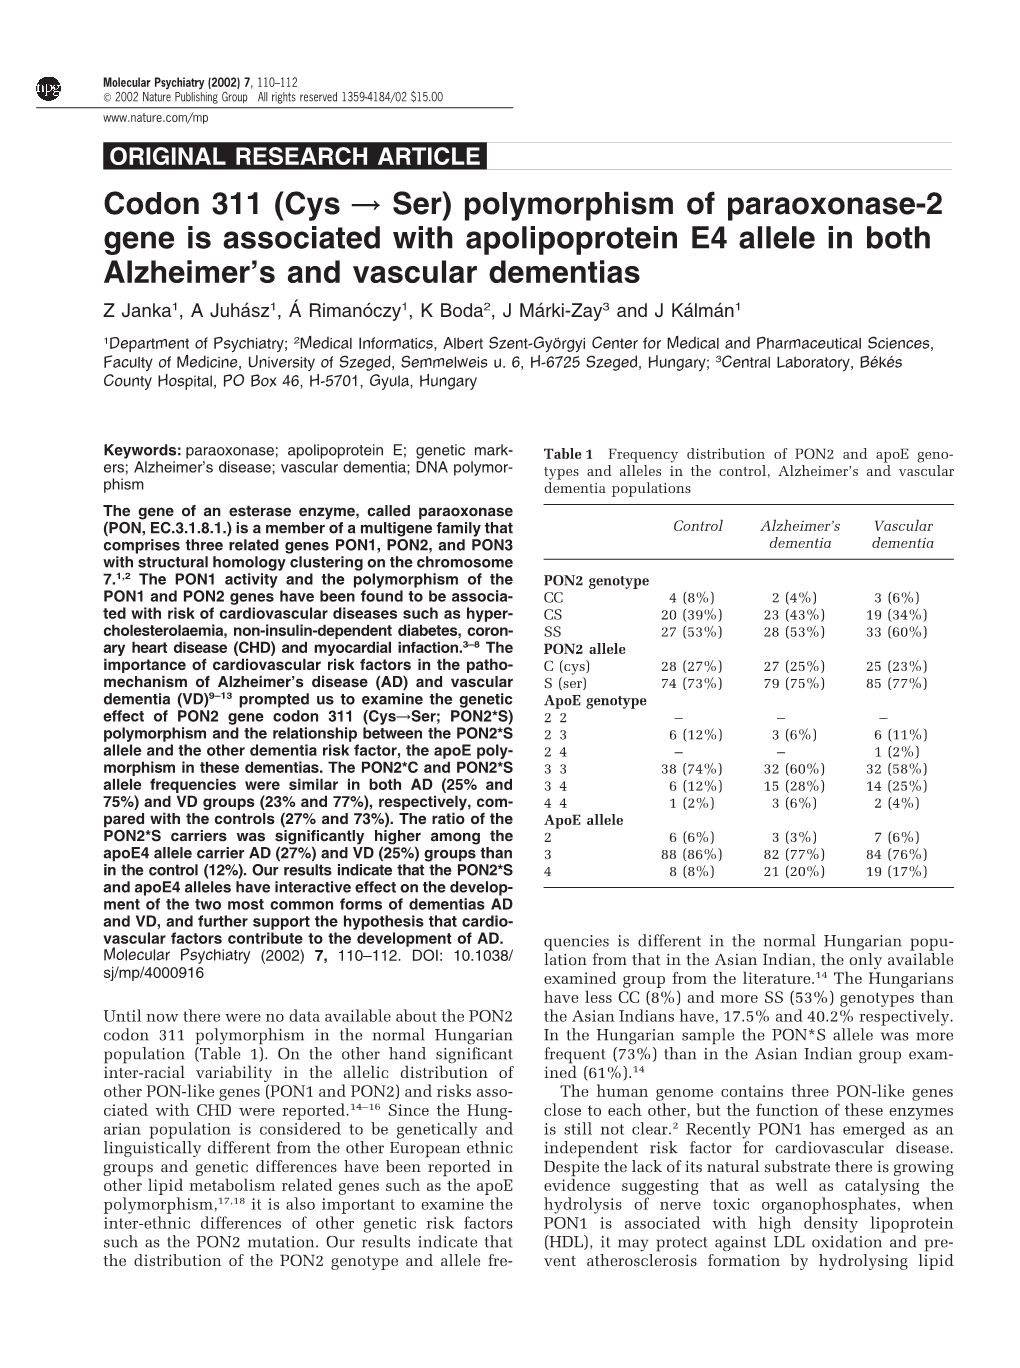 Polymorphism of Paraoxonase-2 Gene Is Associated With